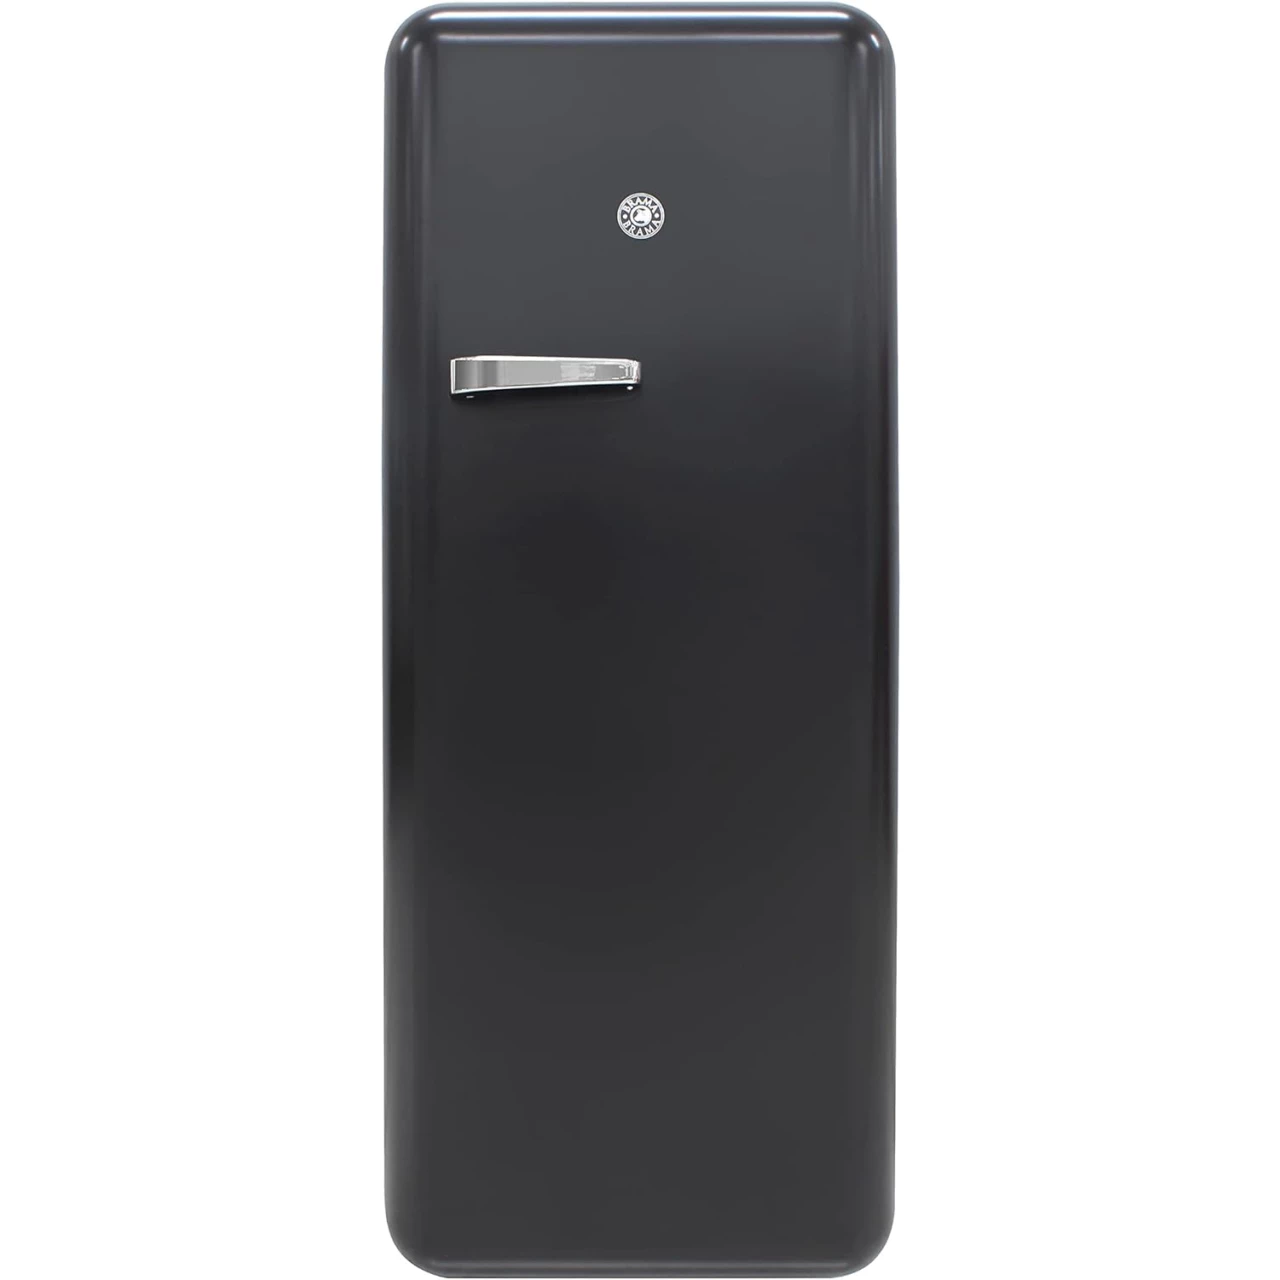 BRAMA Retro Fridge with Top Freezer 9.9 Cu.Ft. Full Refrigerator for Apartment, Condo, House, Kitchen, 24-Inch, Black